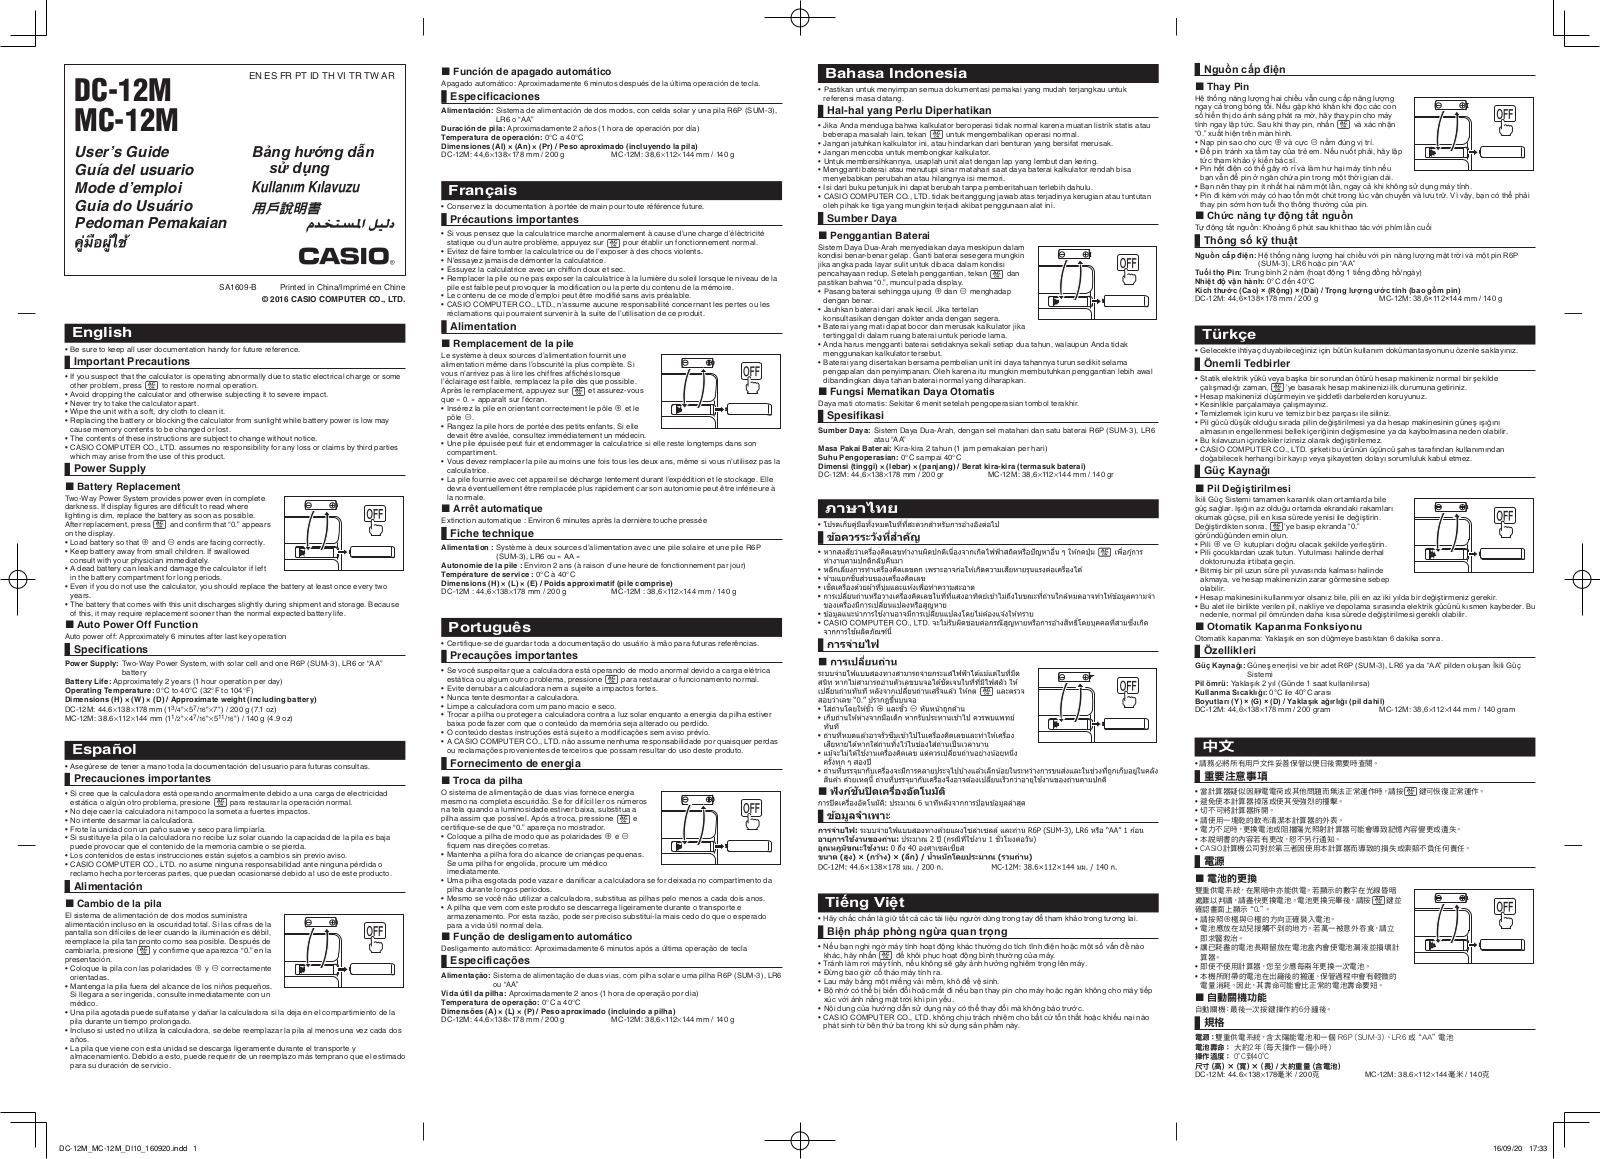 Casio MC-12M, DC-12M User Manual